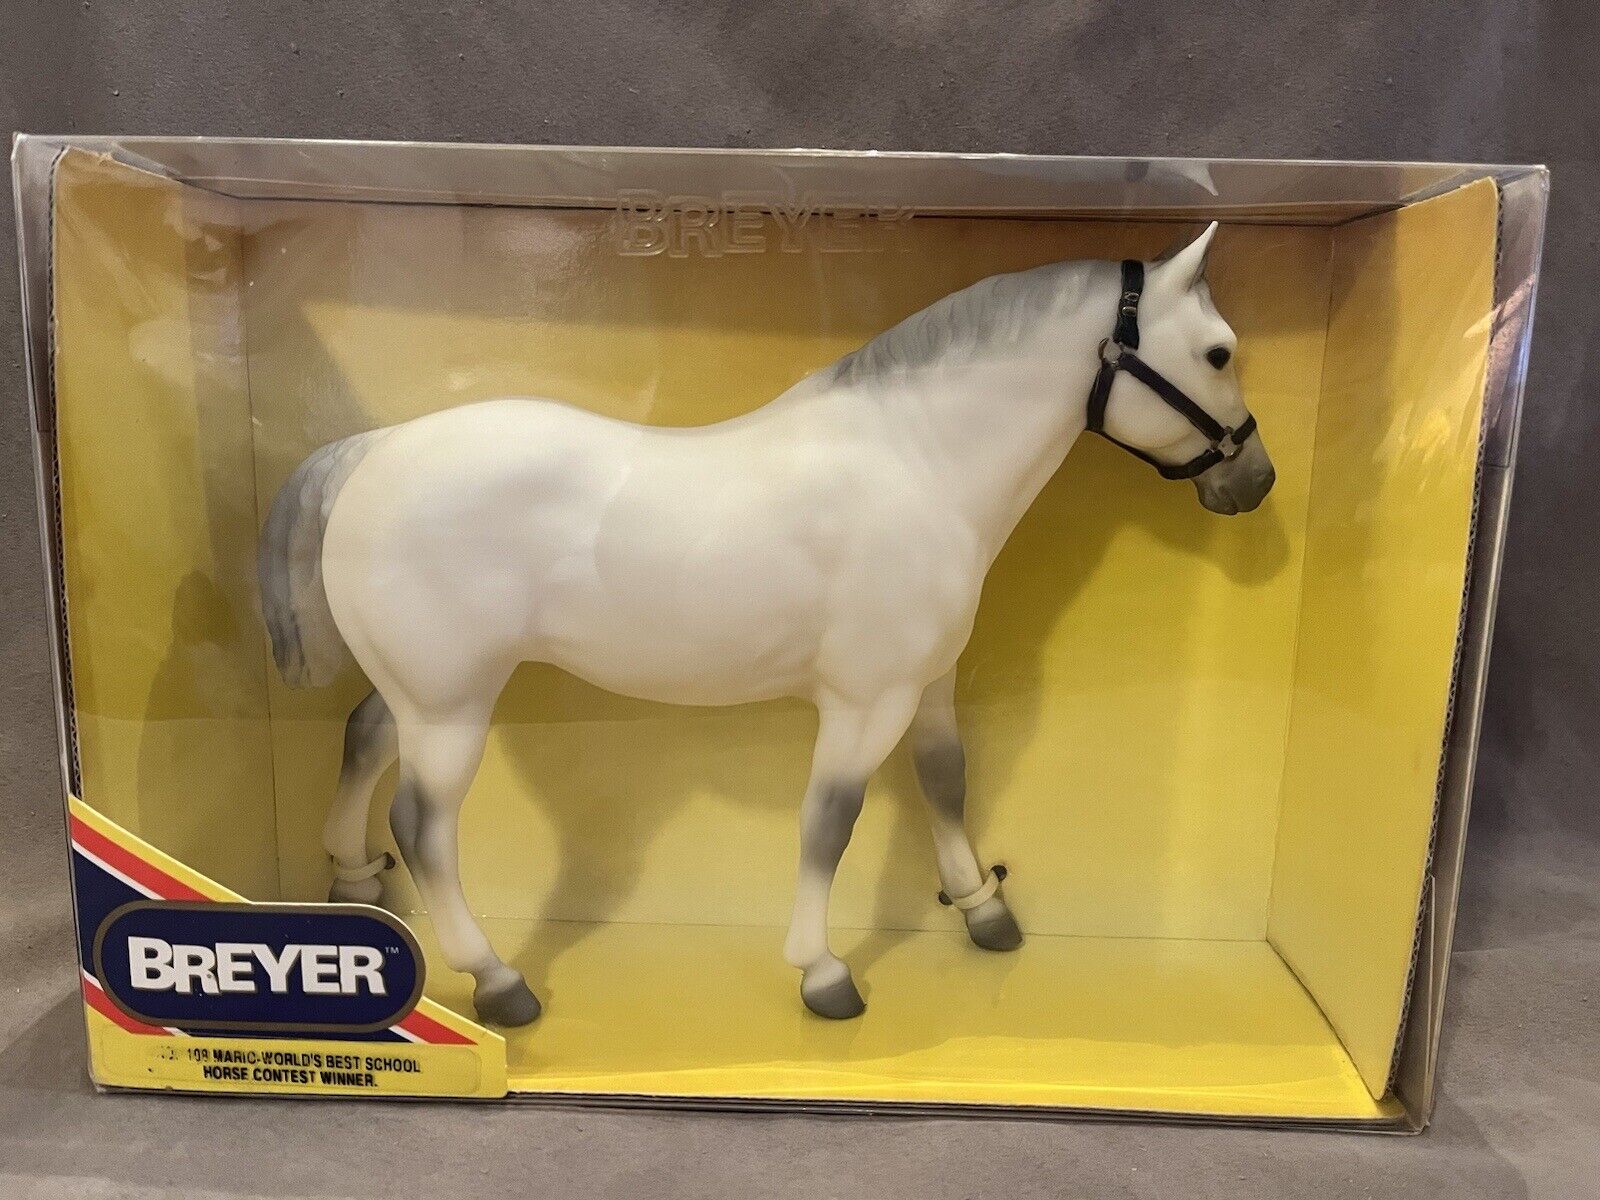 Breyer Model 1108 Mario Worlds Best School Horse Contest Winner Grey QH NIB